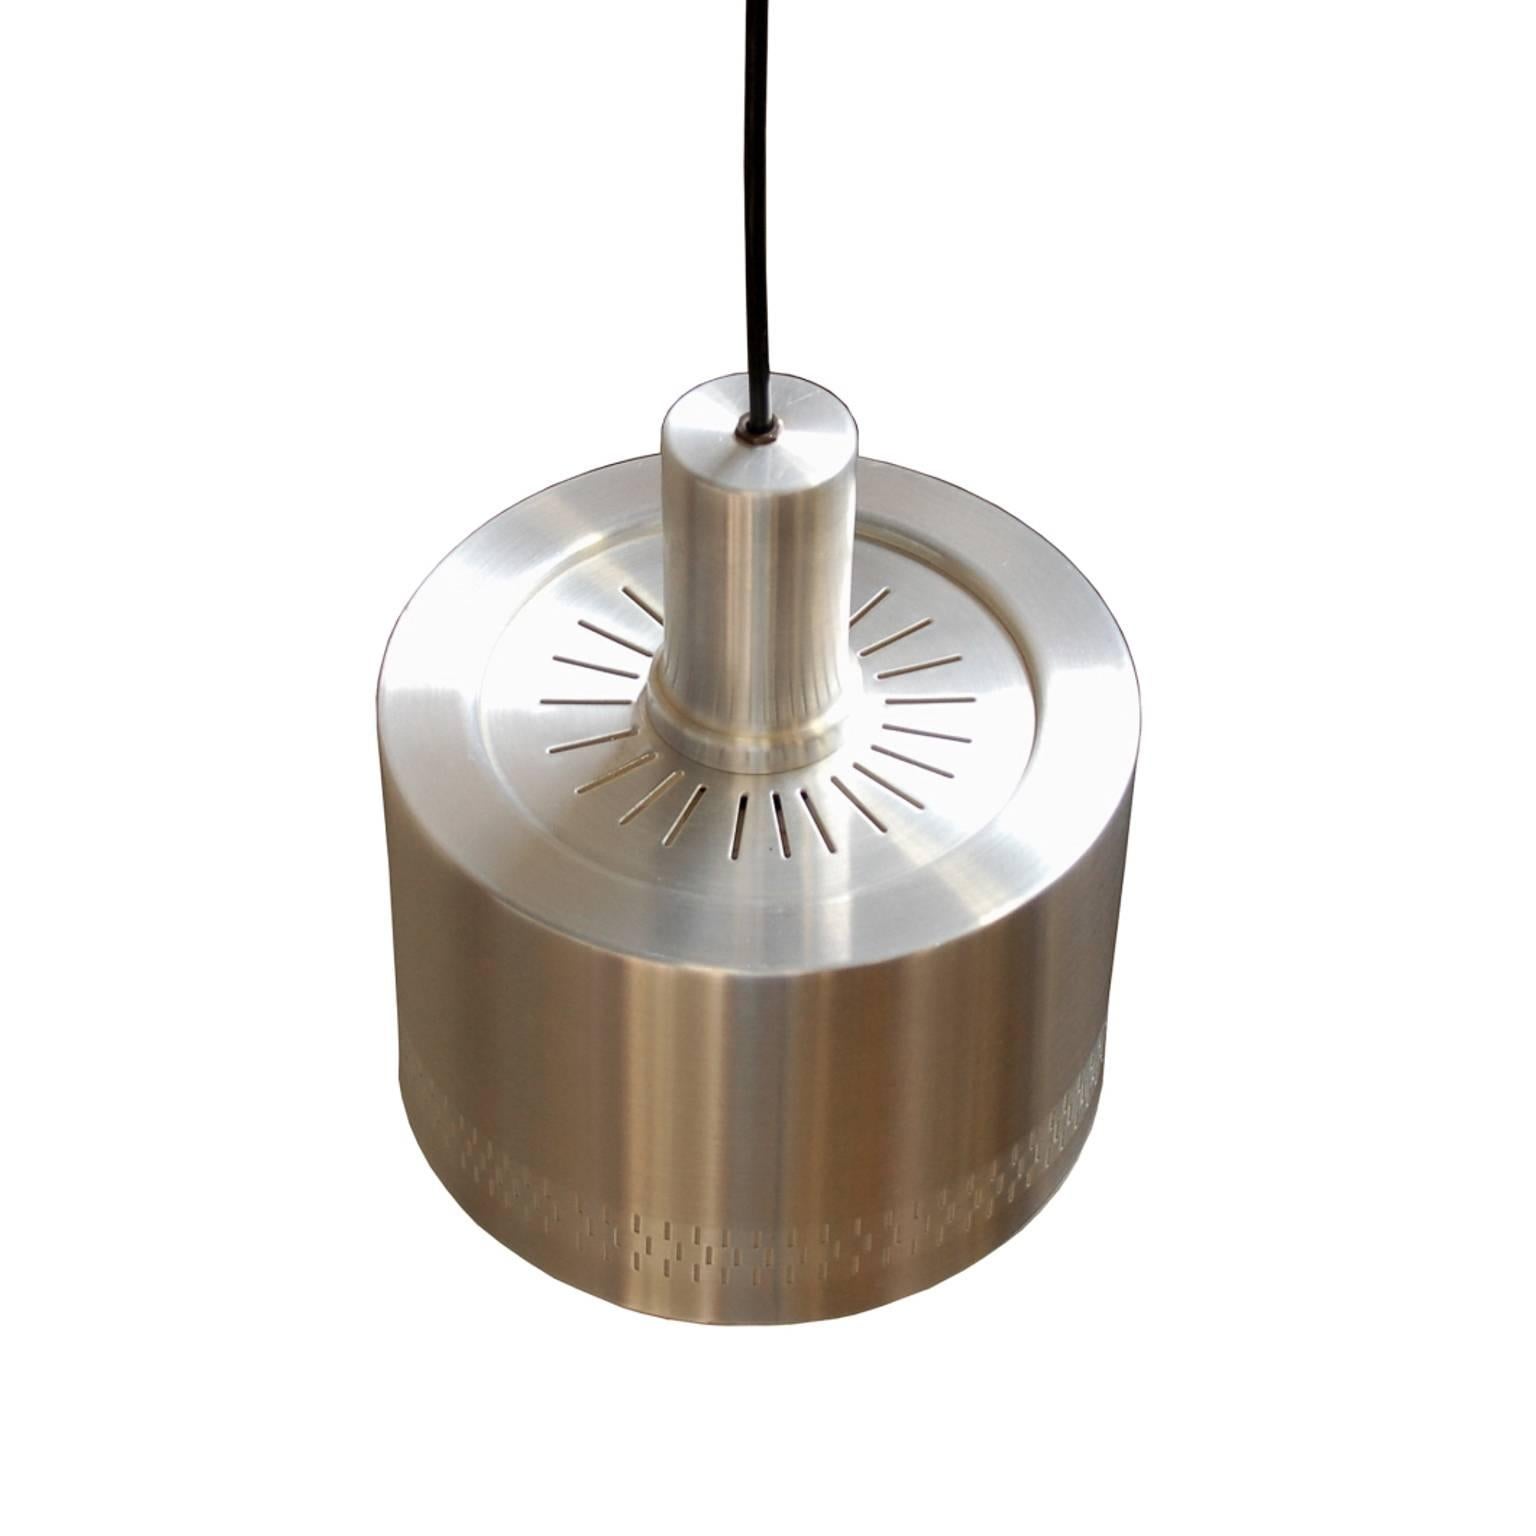 Simple yet elegant pendant lamp in brushed aluminium. The perforated rim makes for a nice detail.